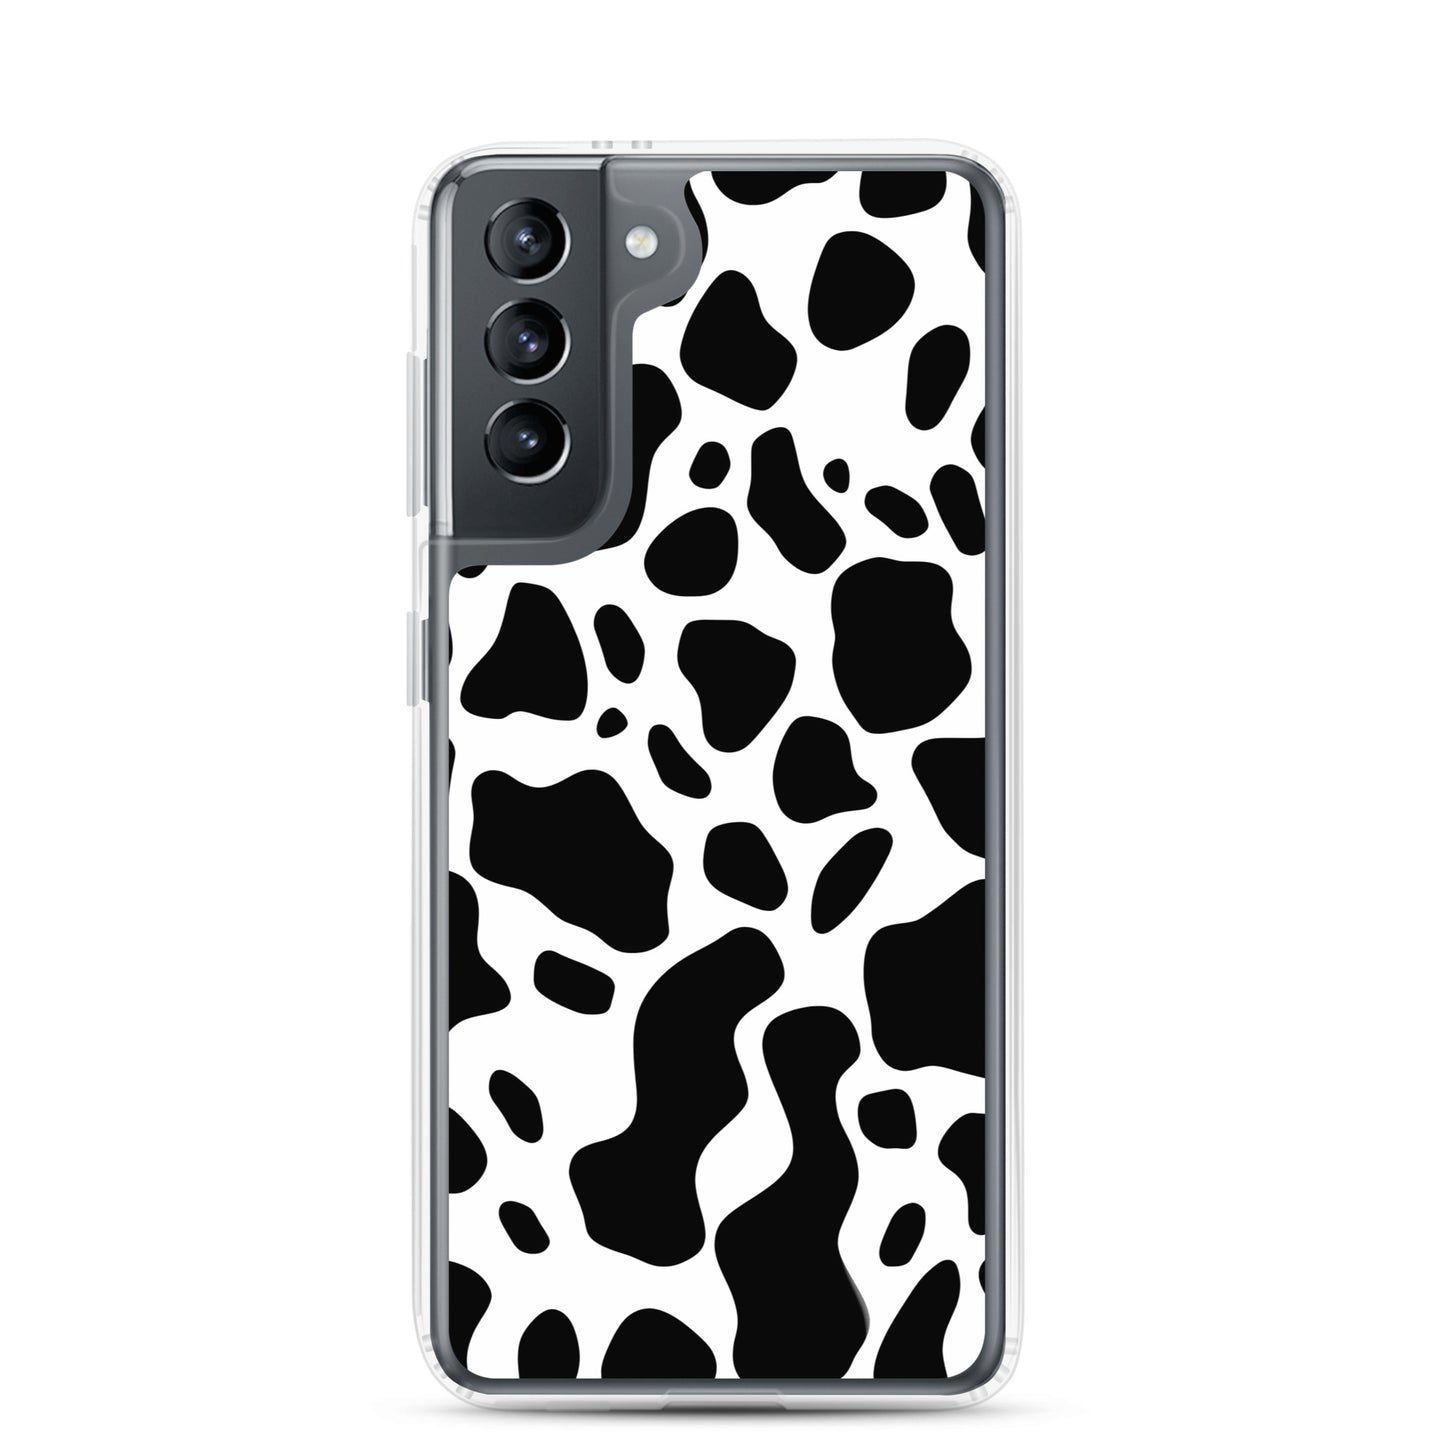 Samsung Case - Cow Print #3